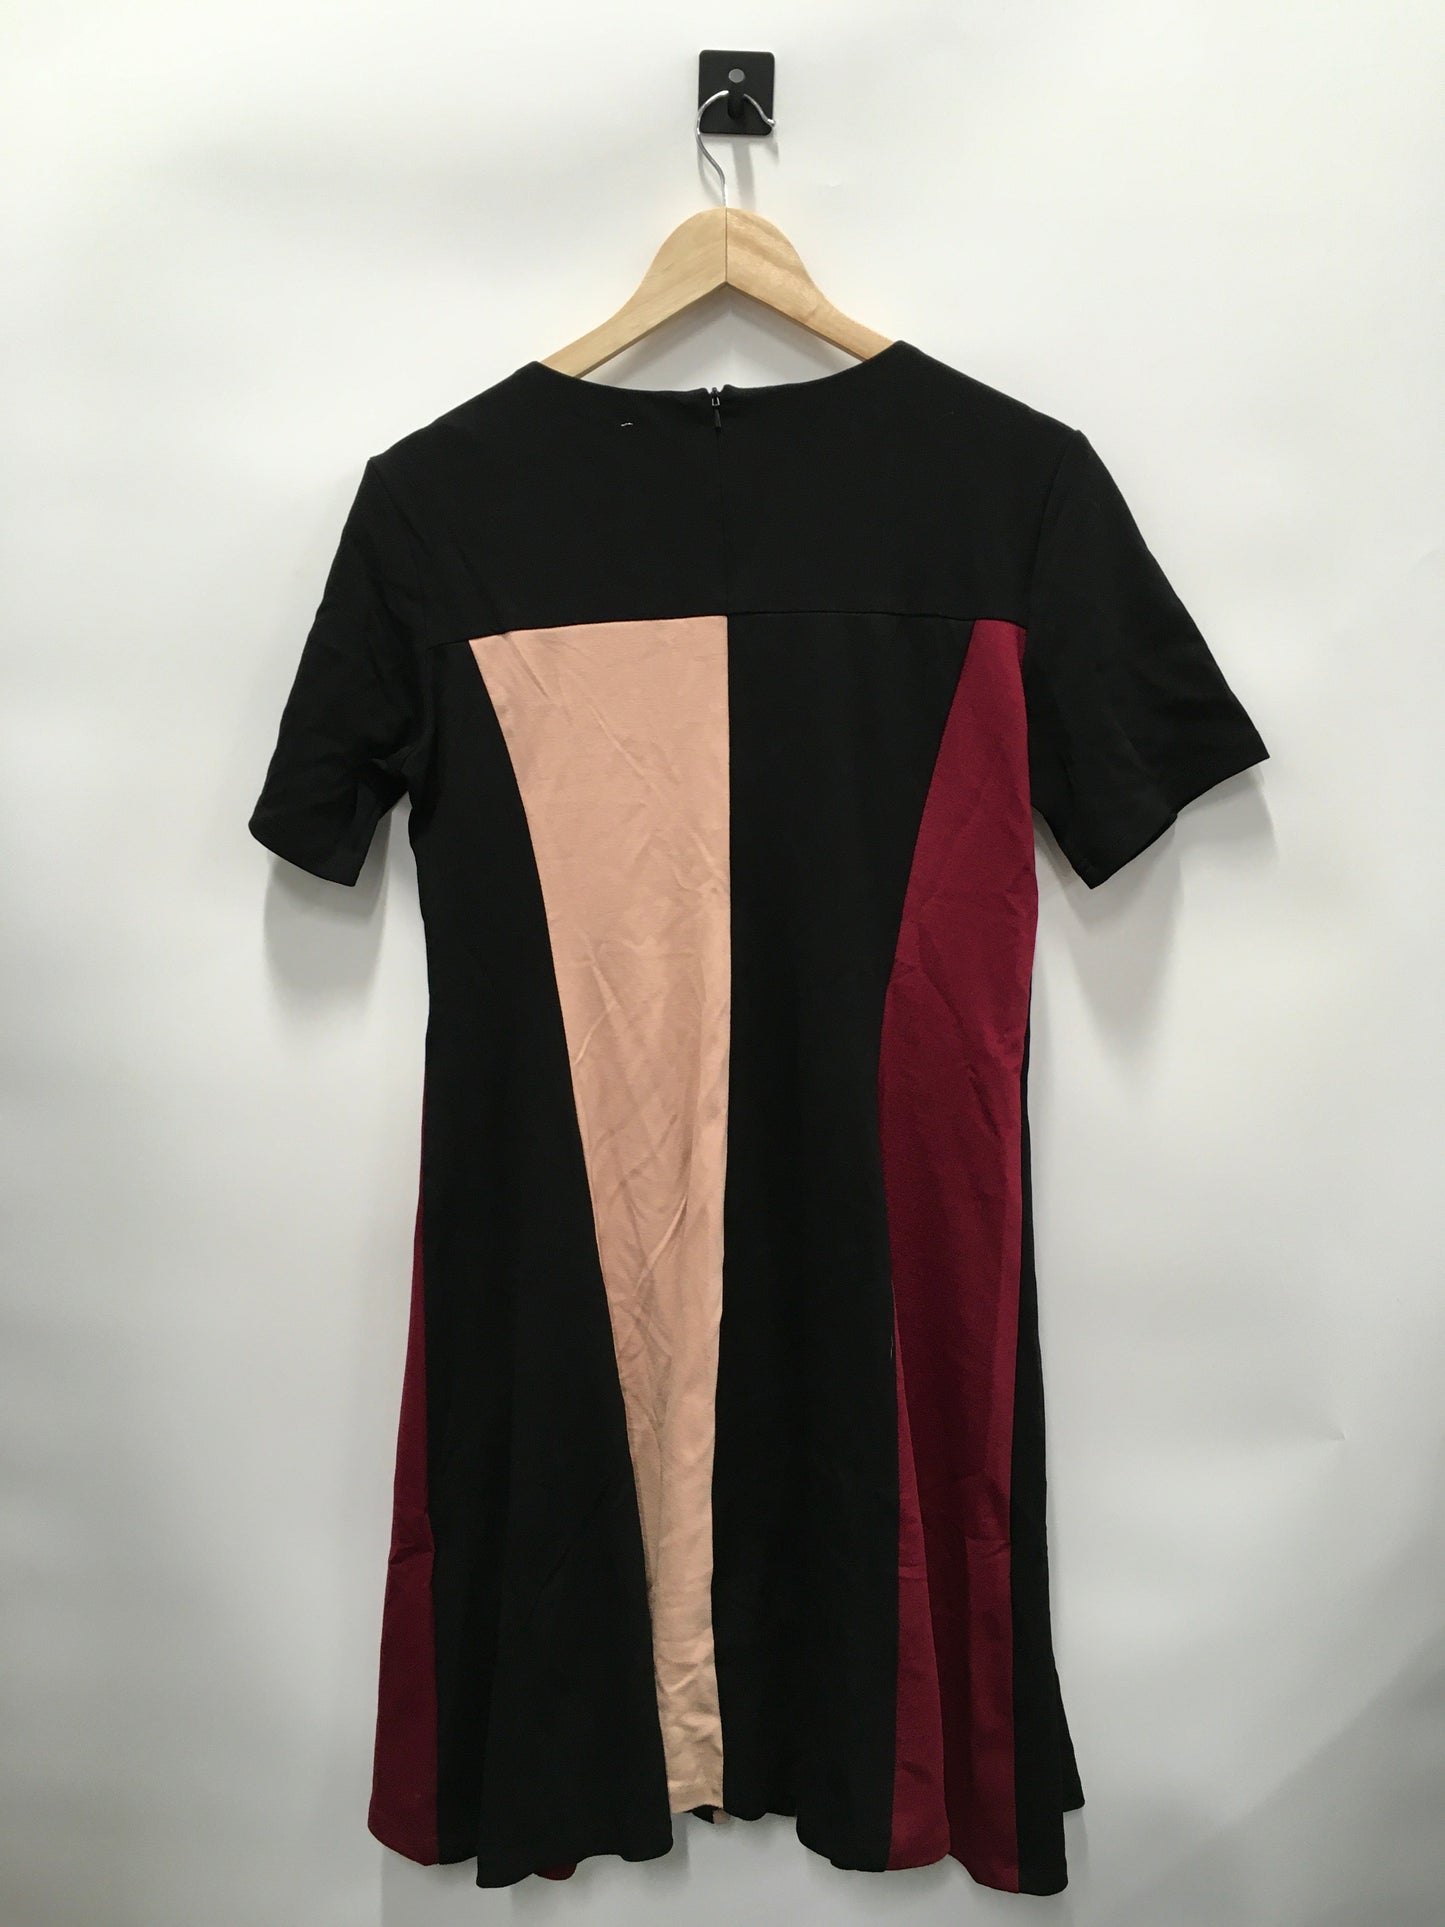 Black & Red Dress Casual Midi Hutch, Size L